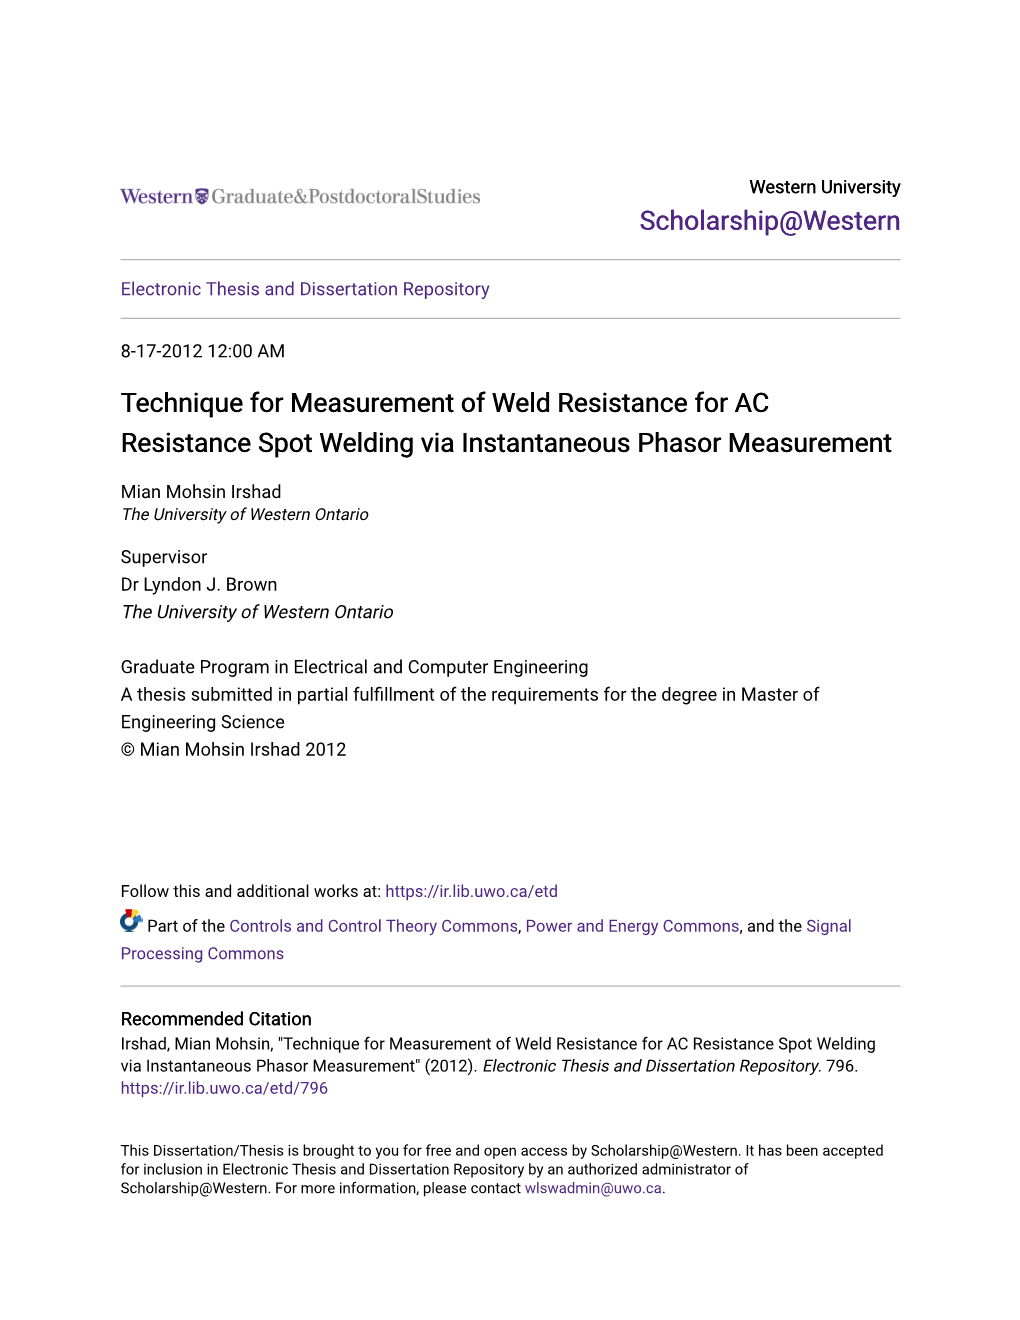 Technique for Measurement of Weld Resistance for AC Resistance Spot Welding Via Instantaneous Phasor Measurement